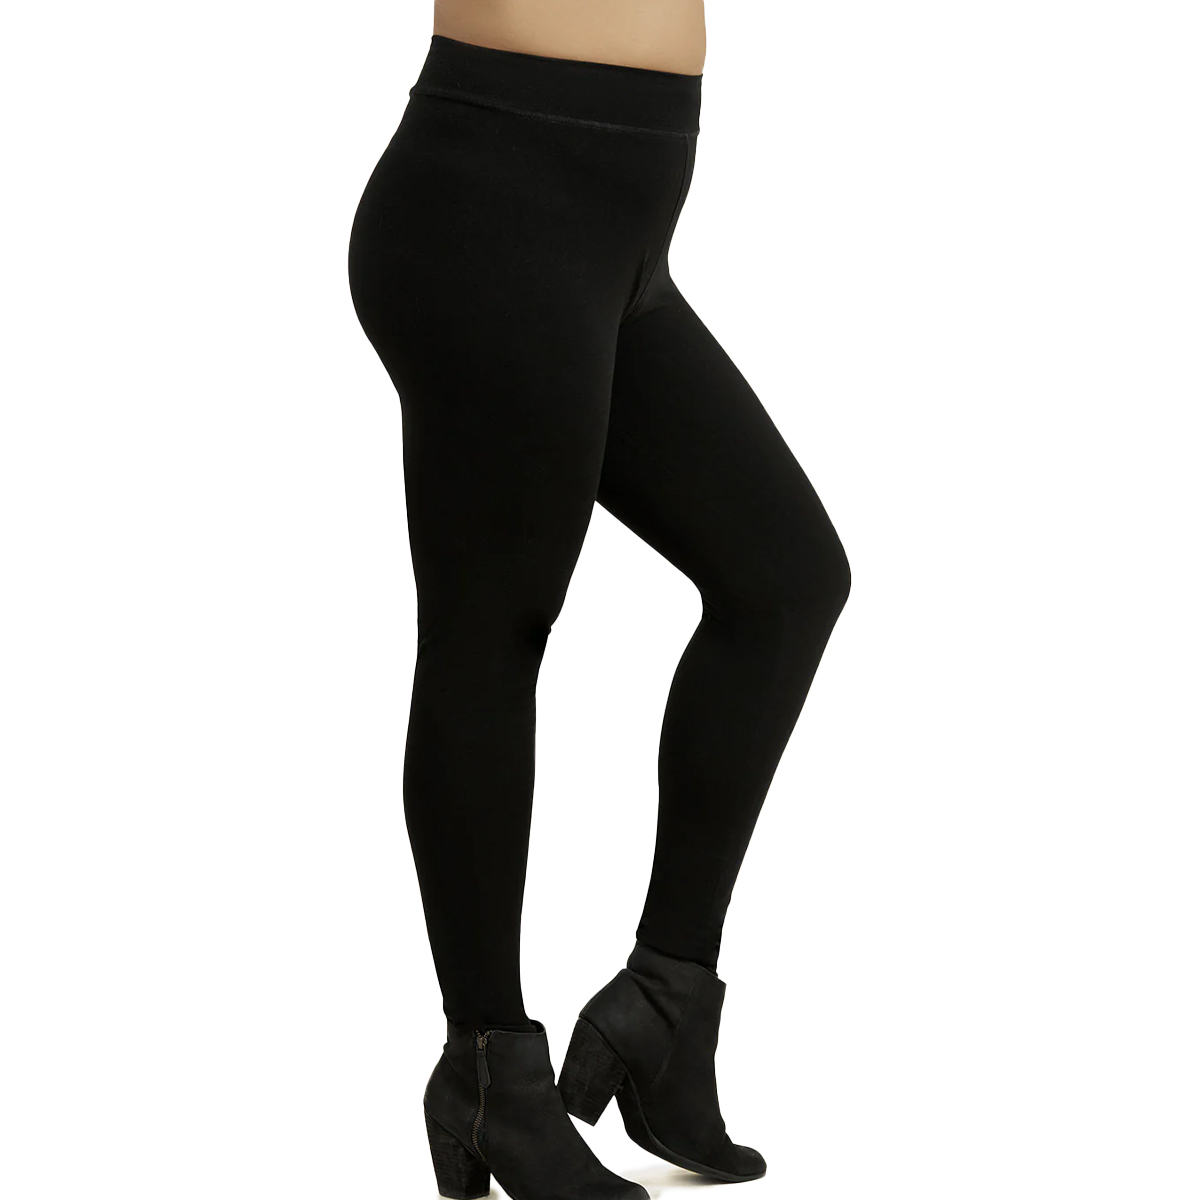 Wholesale Women's Plus Size Leggings in Black, XL - DollarDays